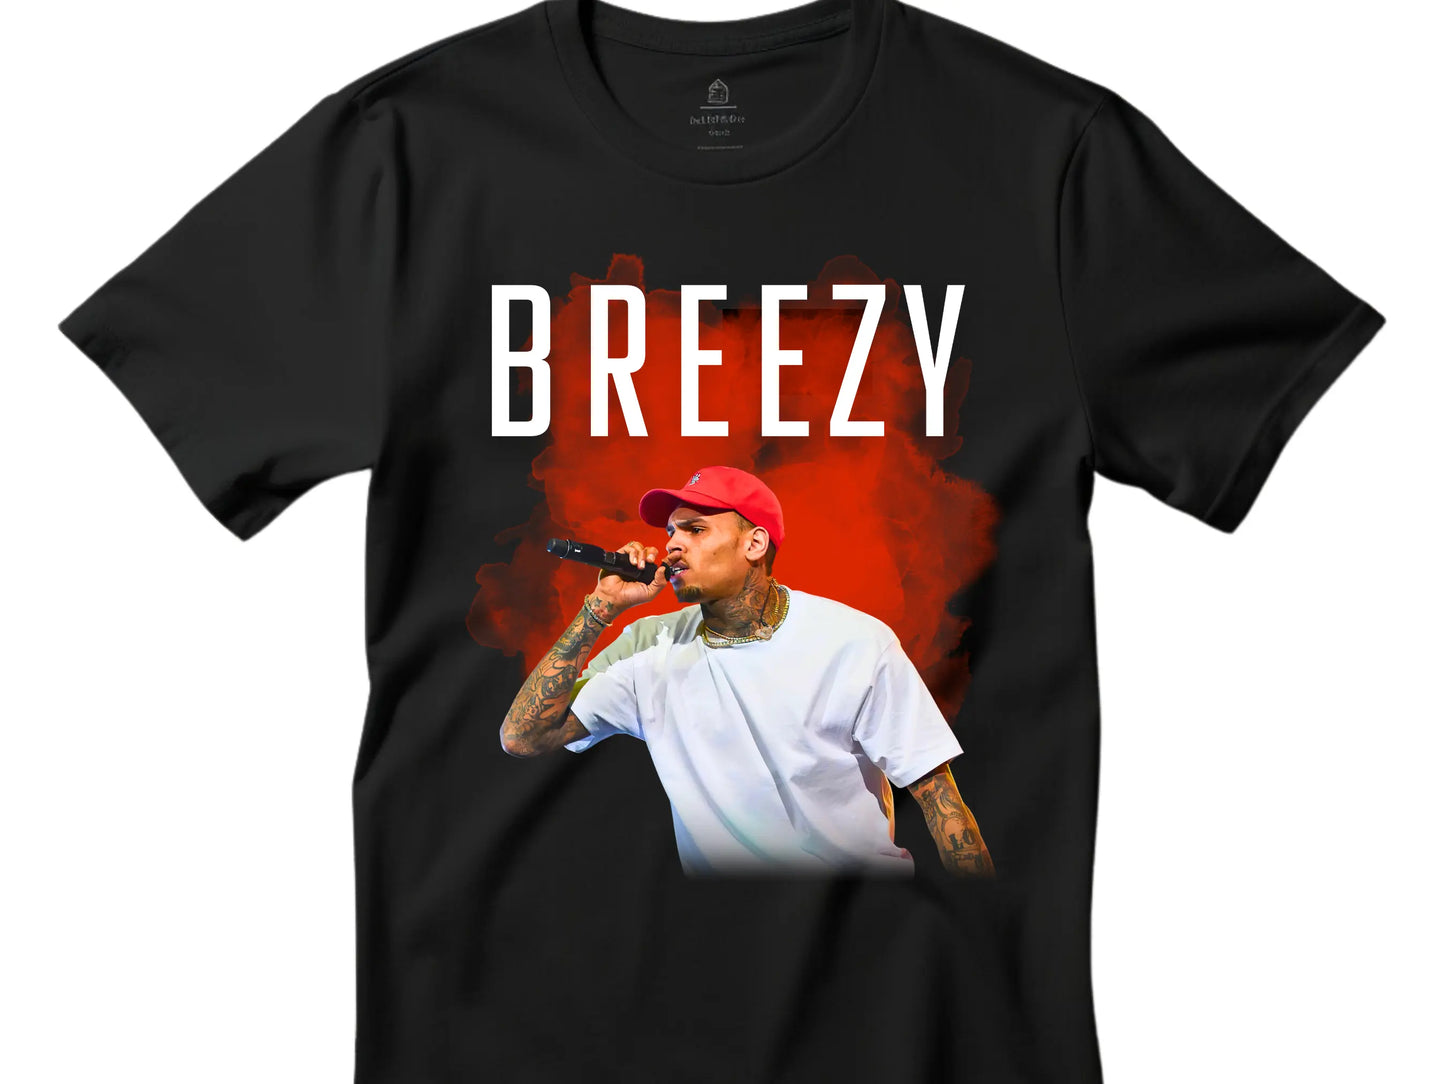 Chris Brown 11:11 Tour Black T-Shirt - Limited Edition Concert Merchandise - Black Threadz